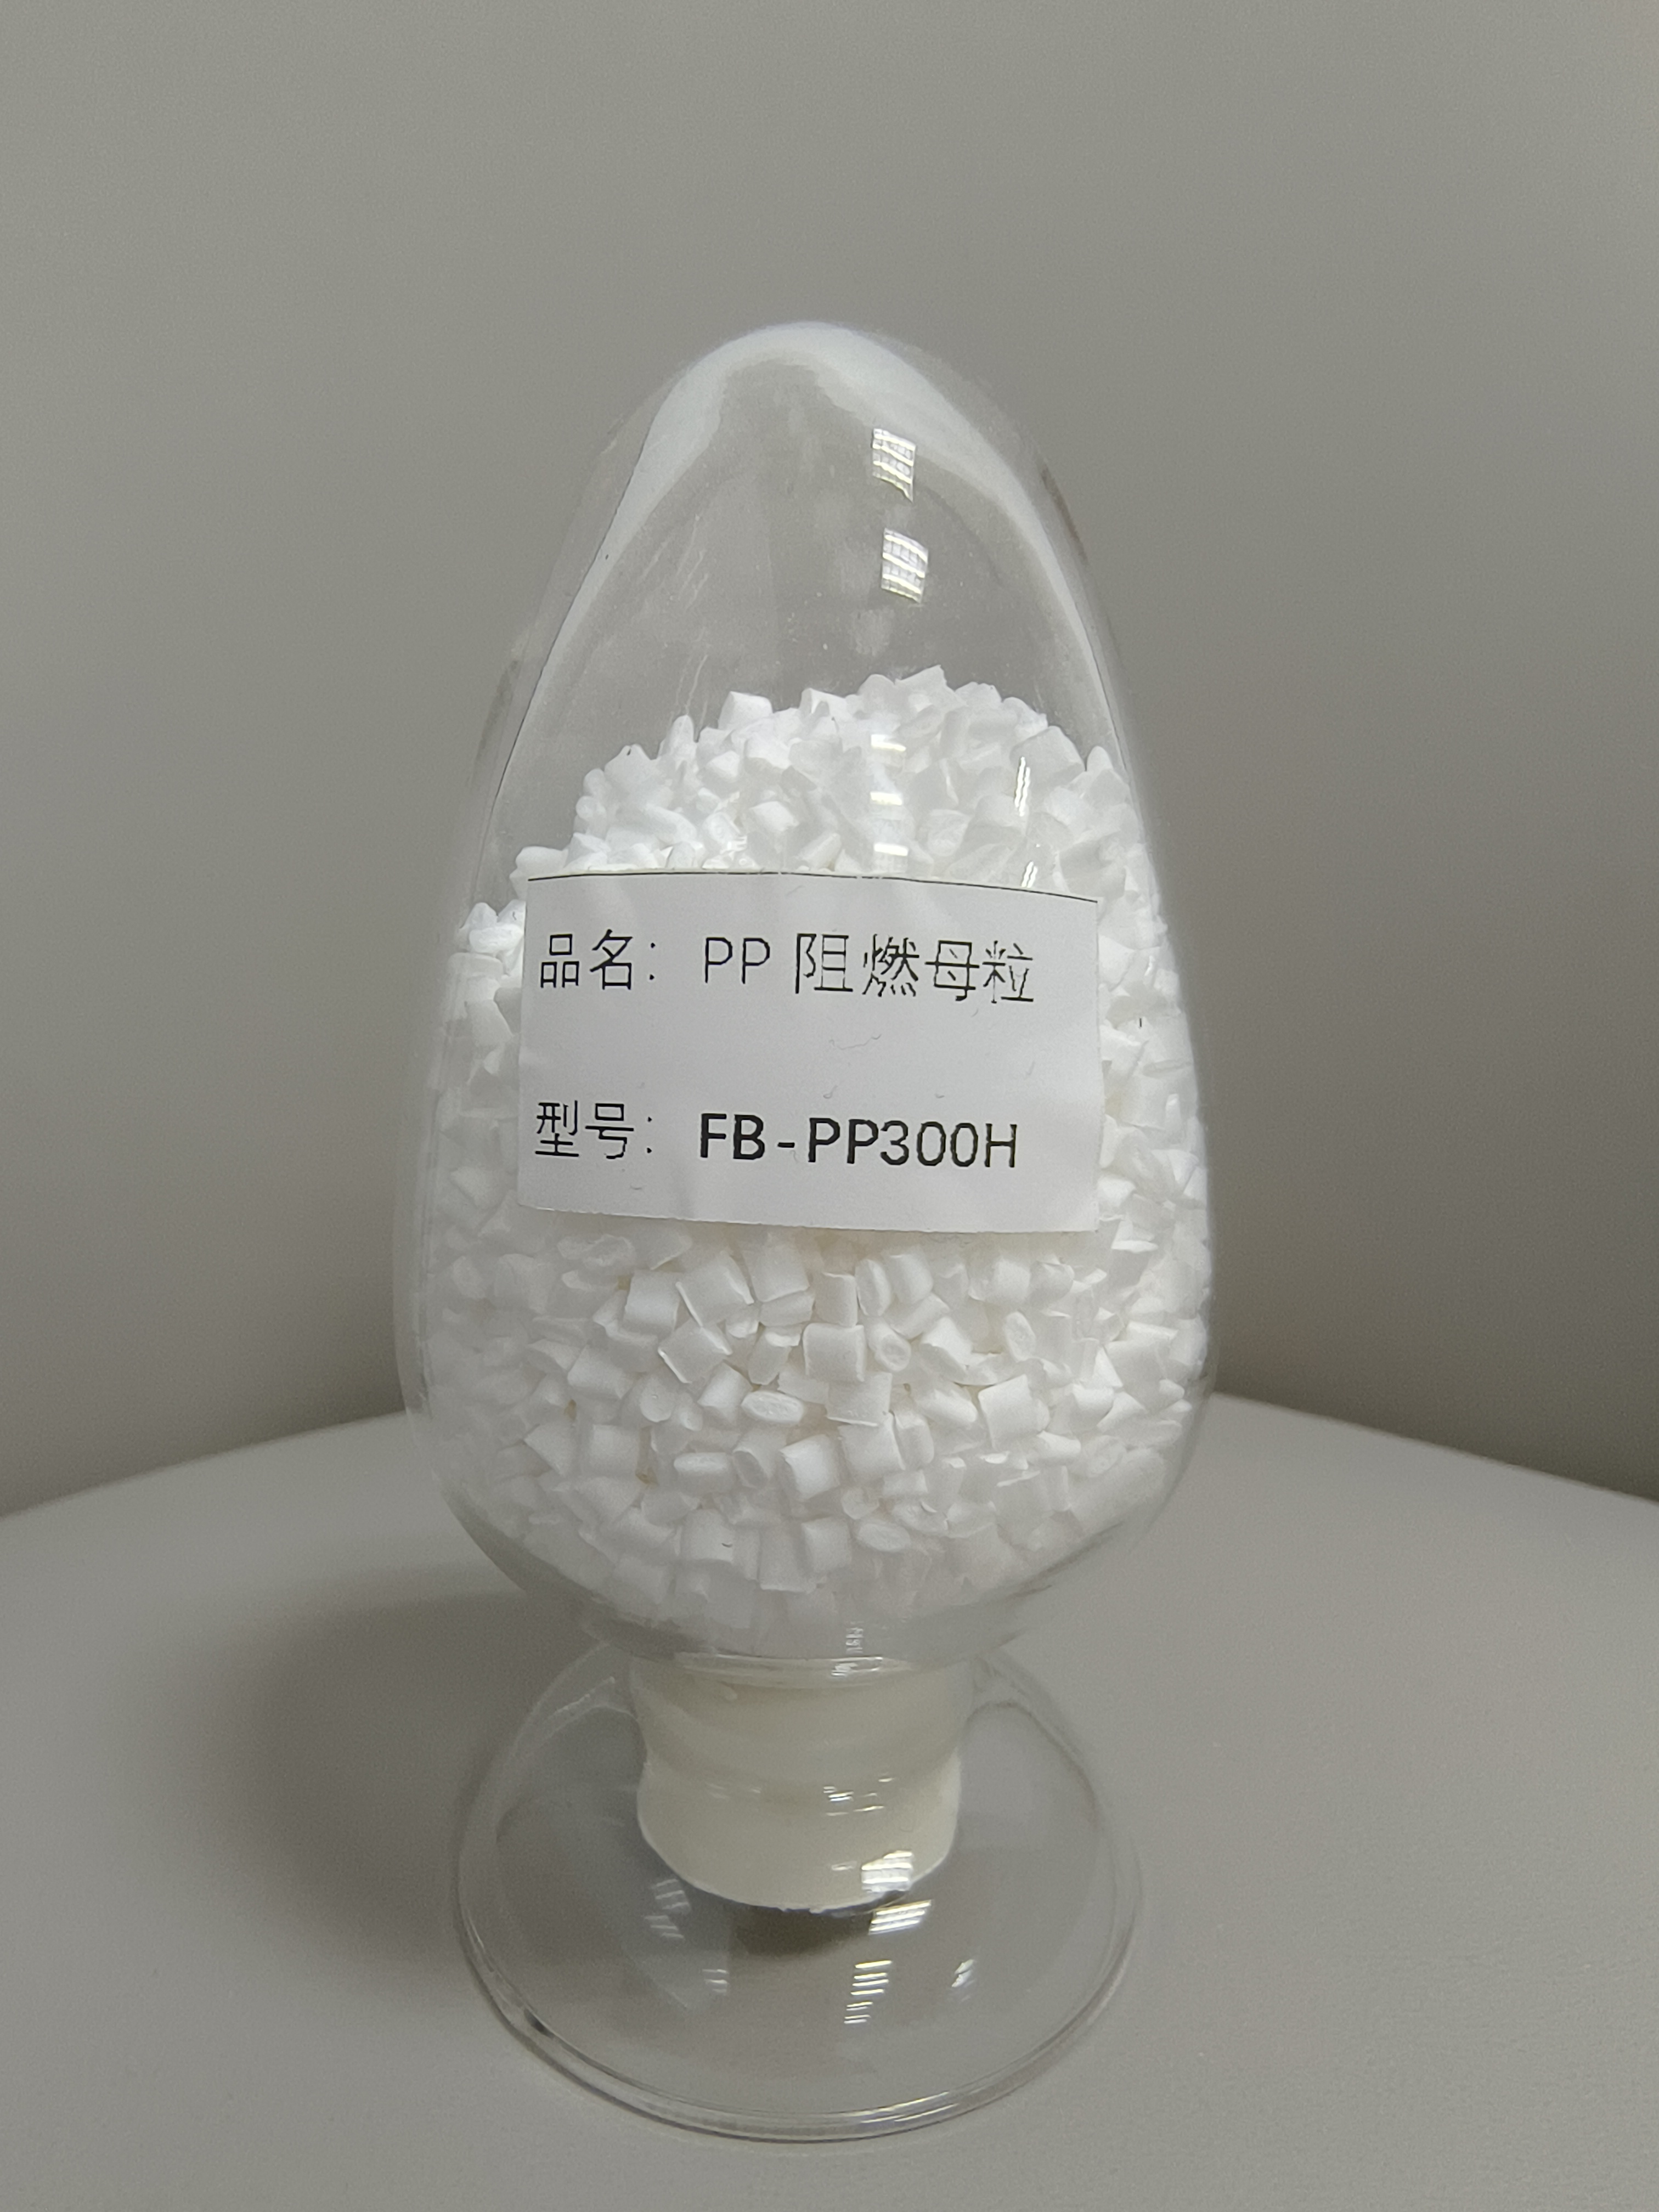 Polypropylene (PP) Homopolymer and Copolymer Specialized Flame Retardant Masterbatch